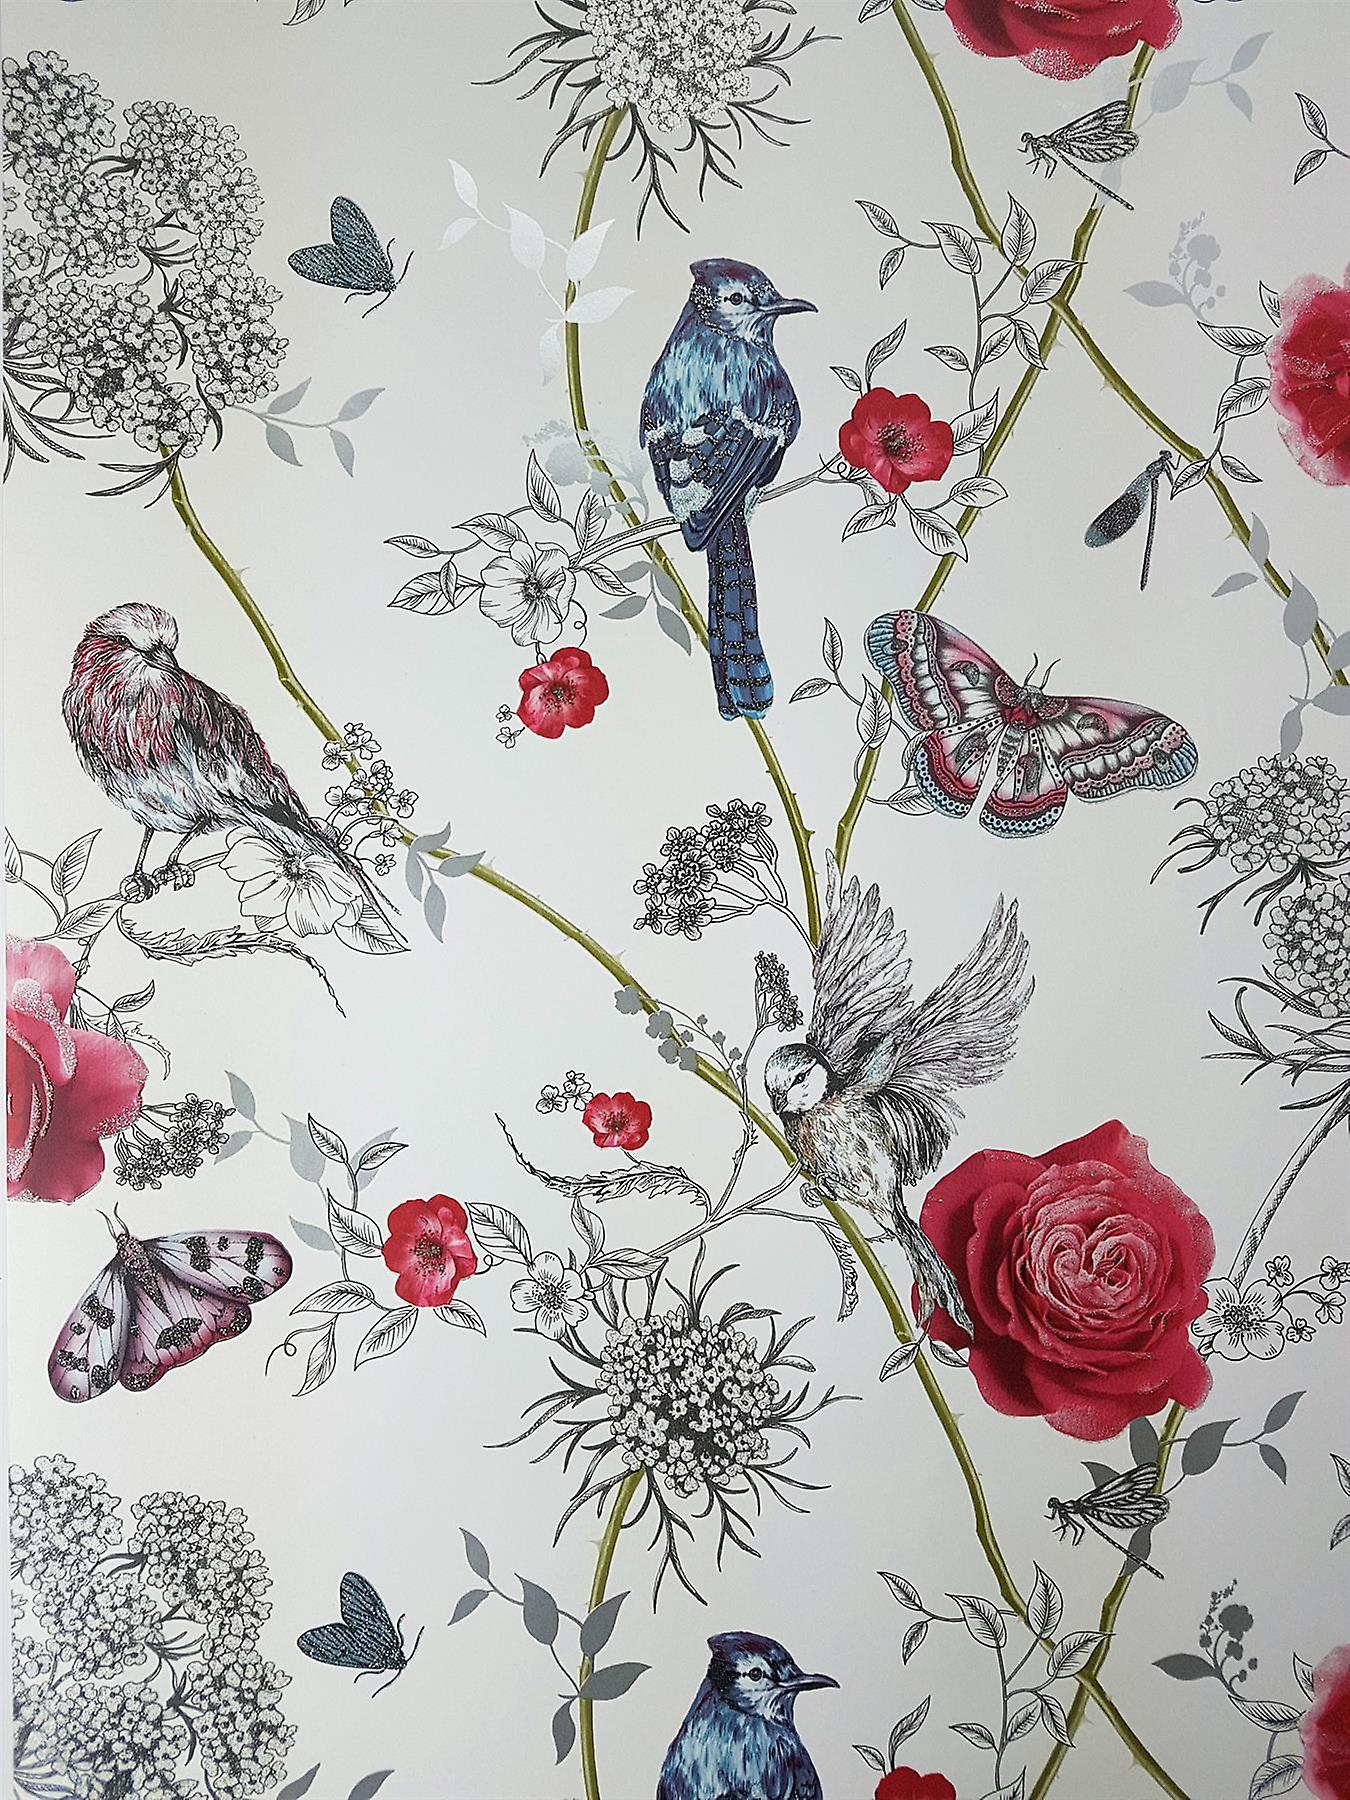 Paradise Garden Birds White Glitter Floral Wallpaper - English Floral Wallpaper Designs - HD Wallpaper 